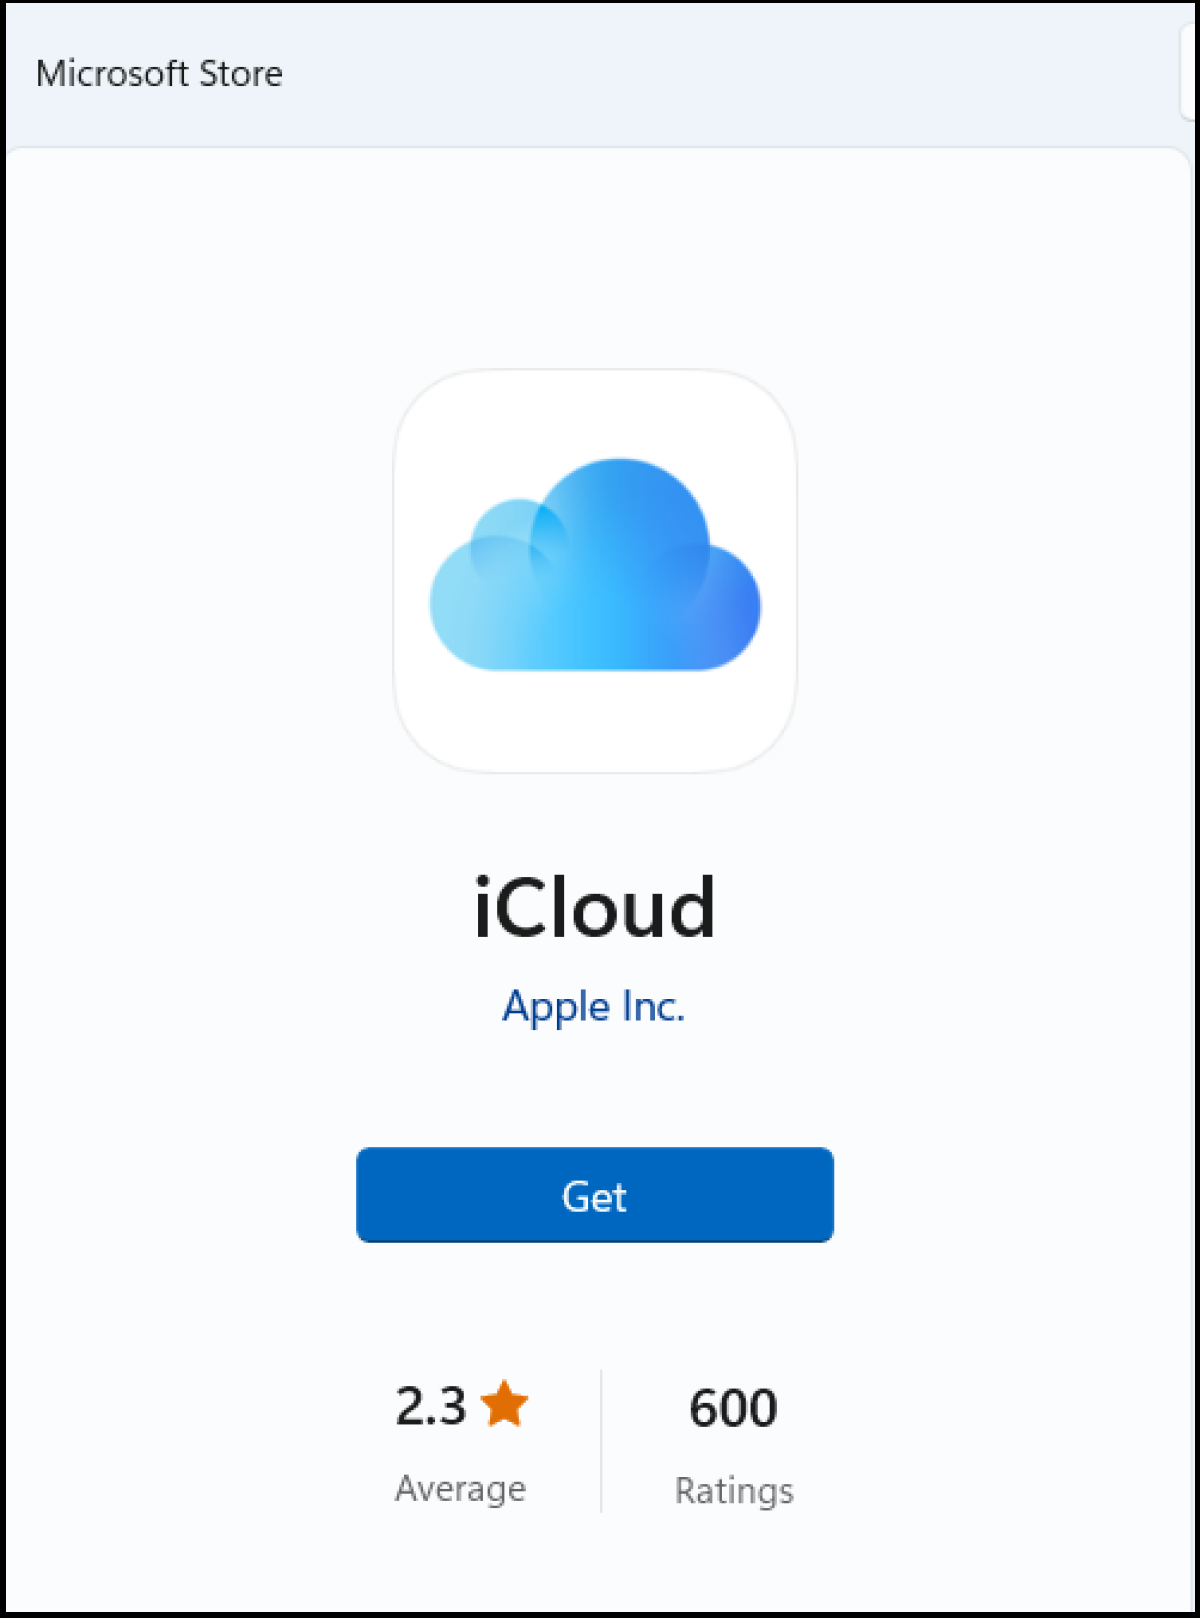 The iCloud desktop app in the Microsoft Store